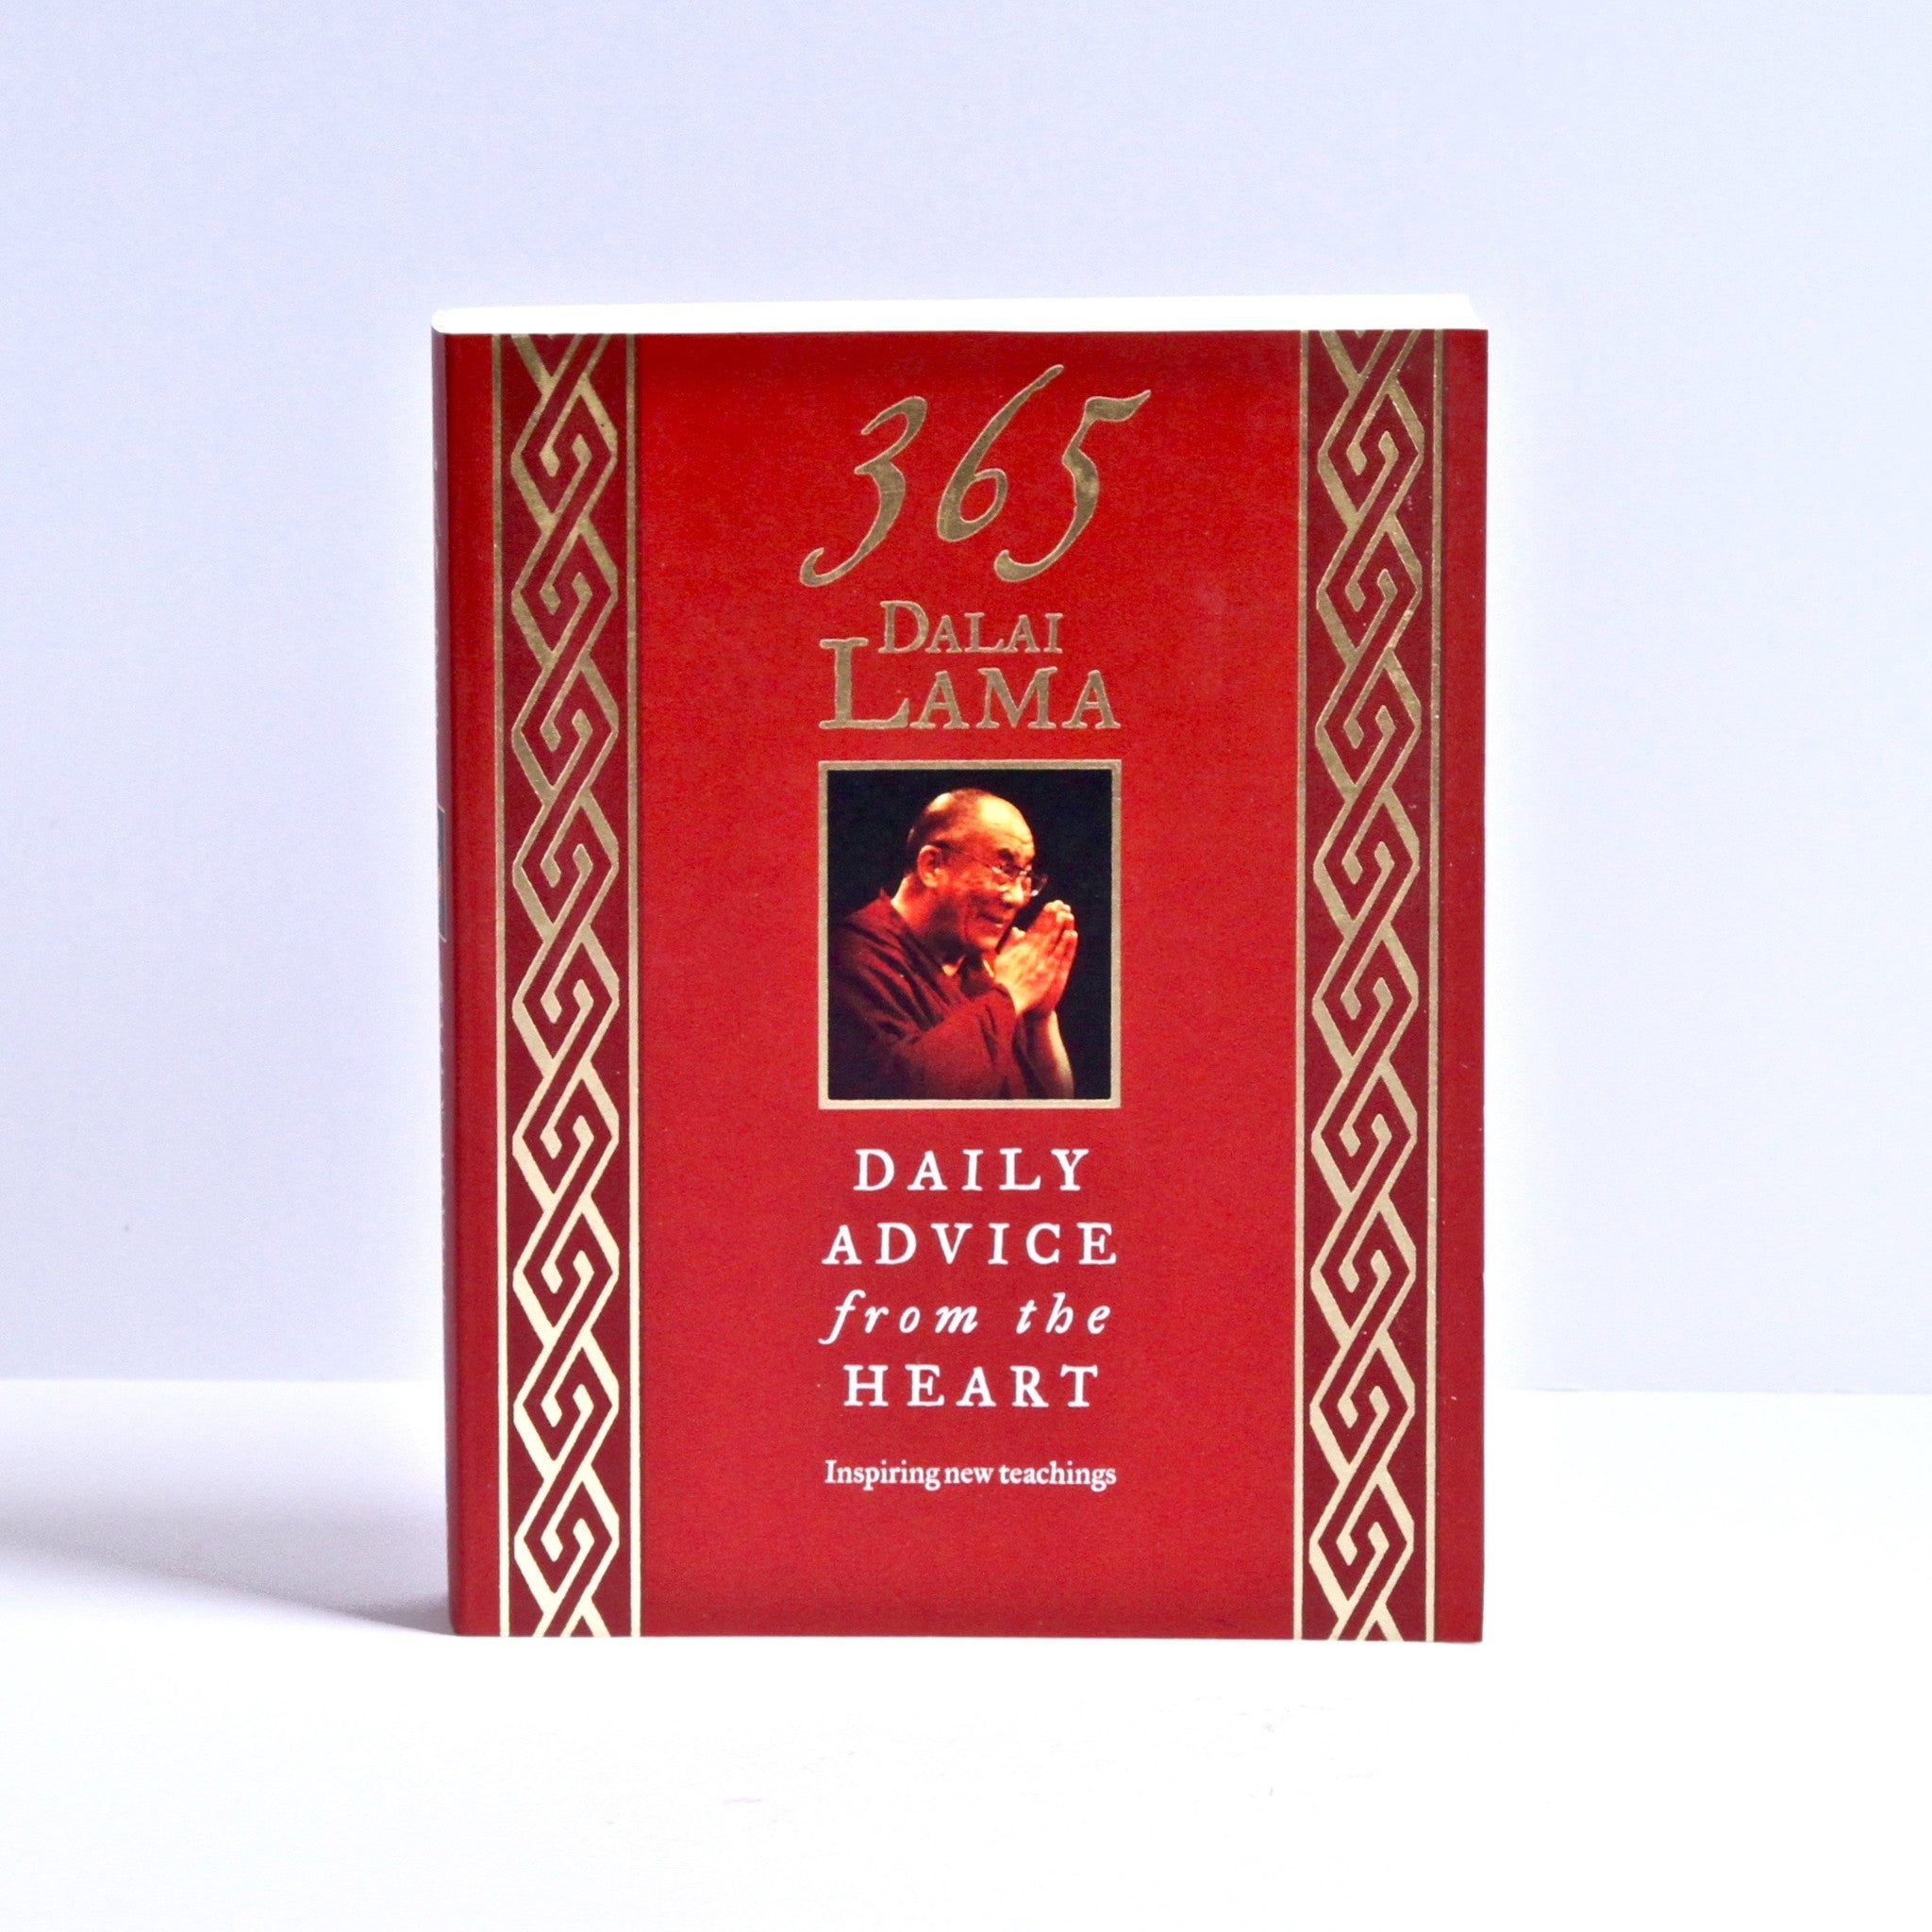 365 Dalai Lama - Daily Advice from the Heart by His Holiness The Dalai Lama